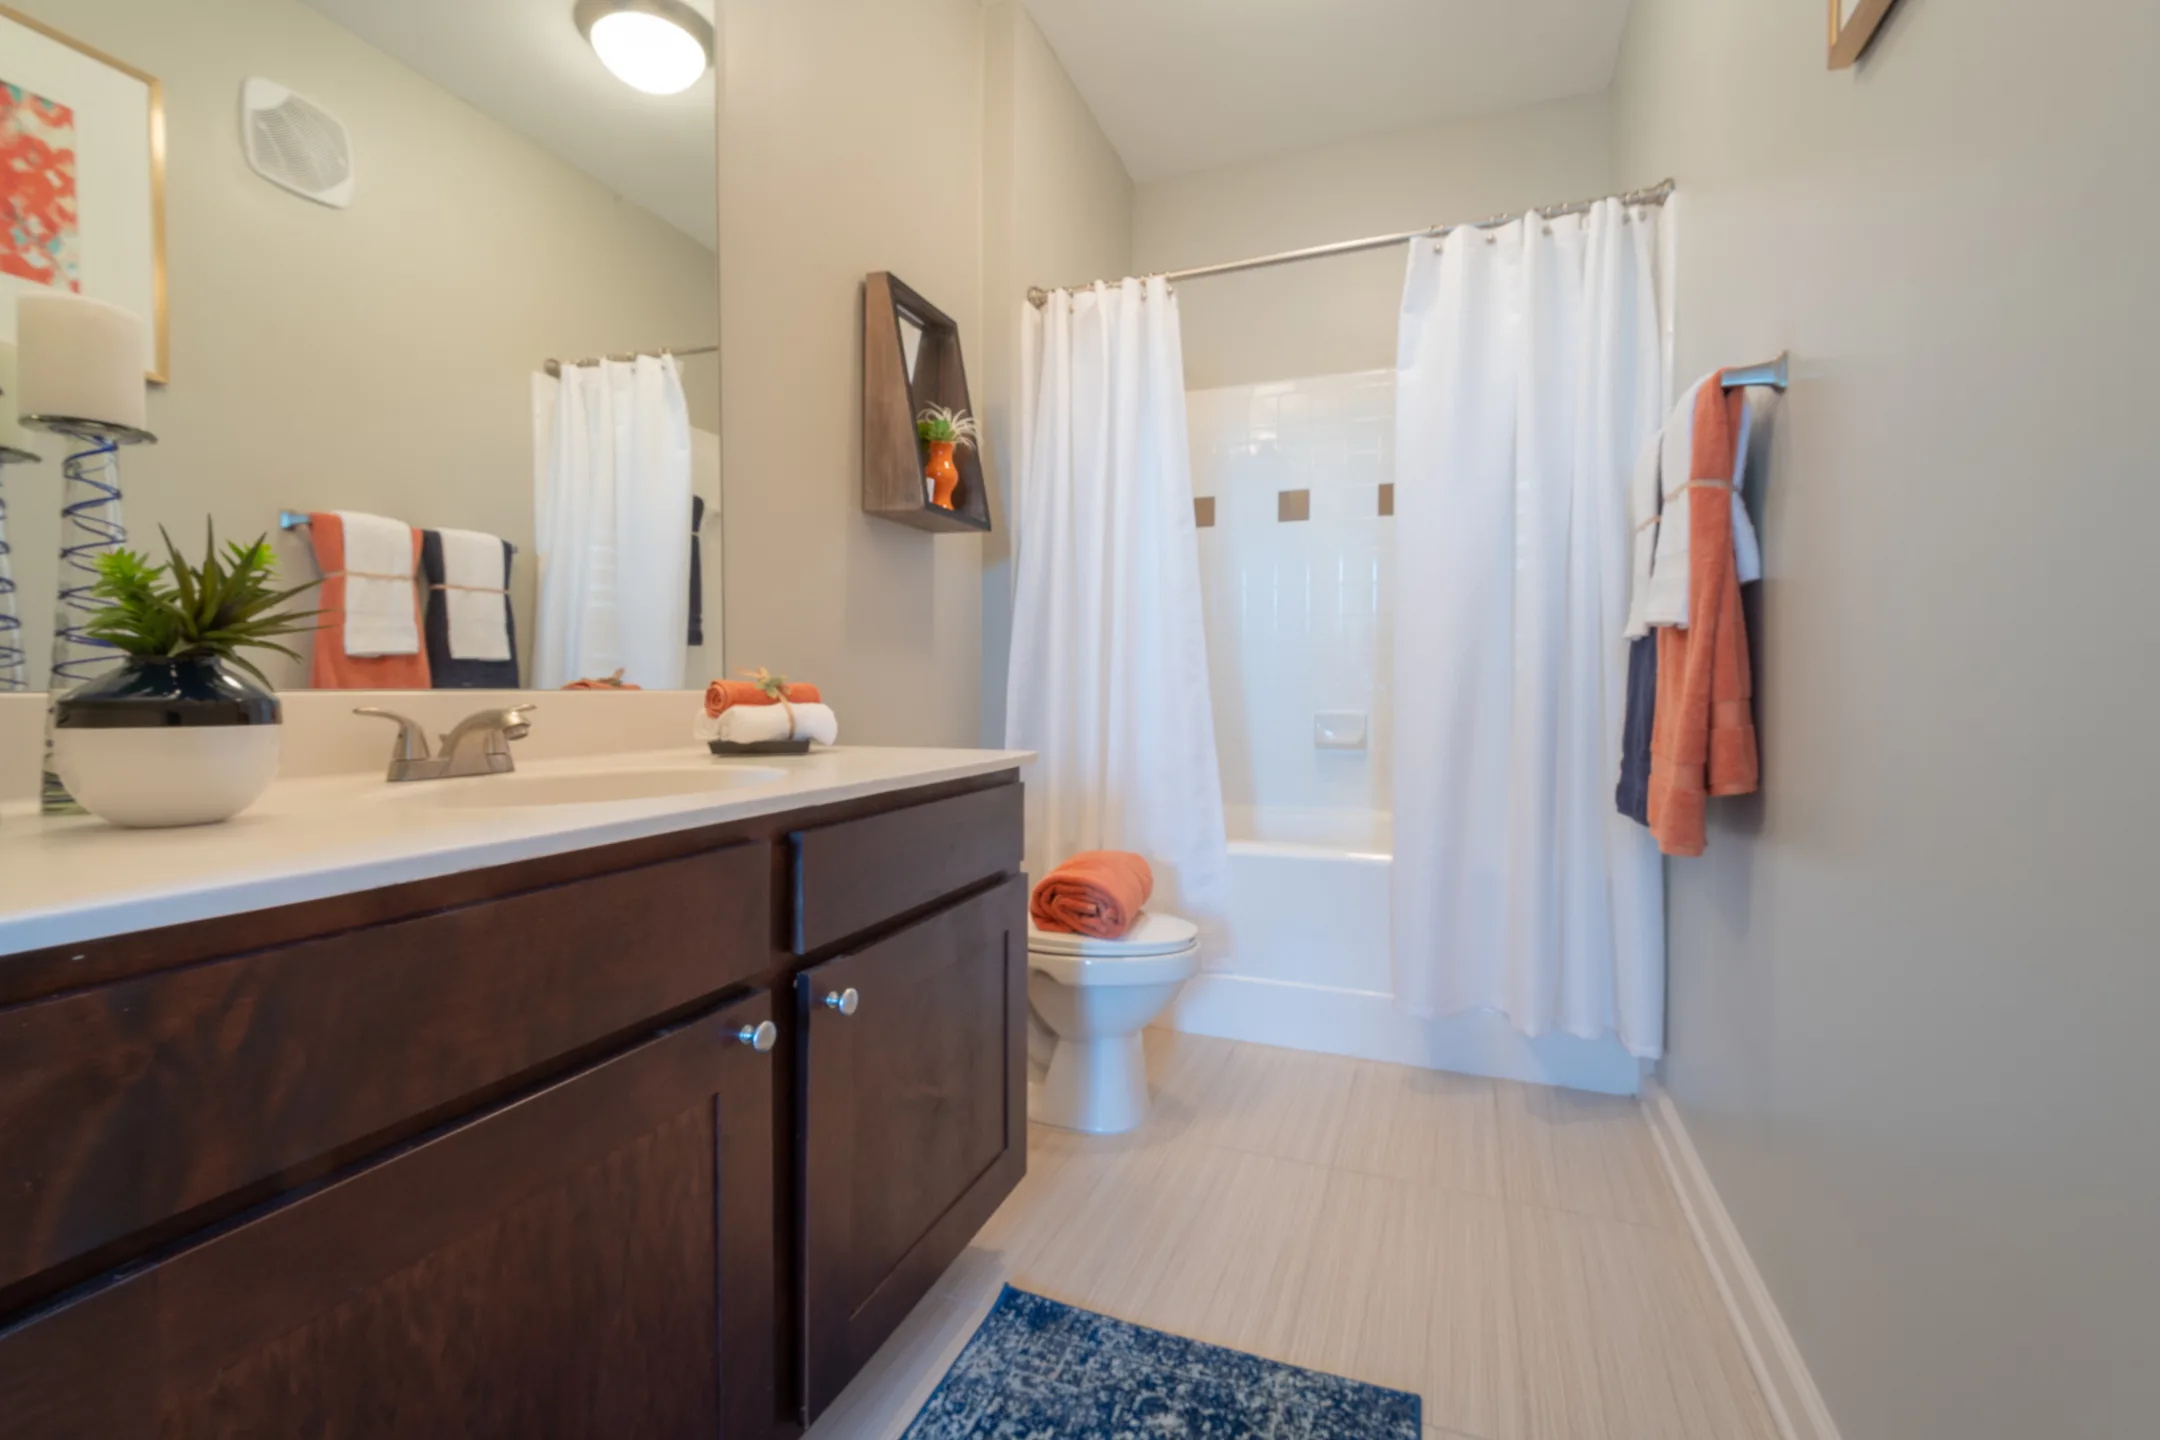 Bathroom - The Crest At Brier Creek Apartments - Raleigh, NC